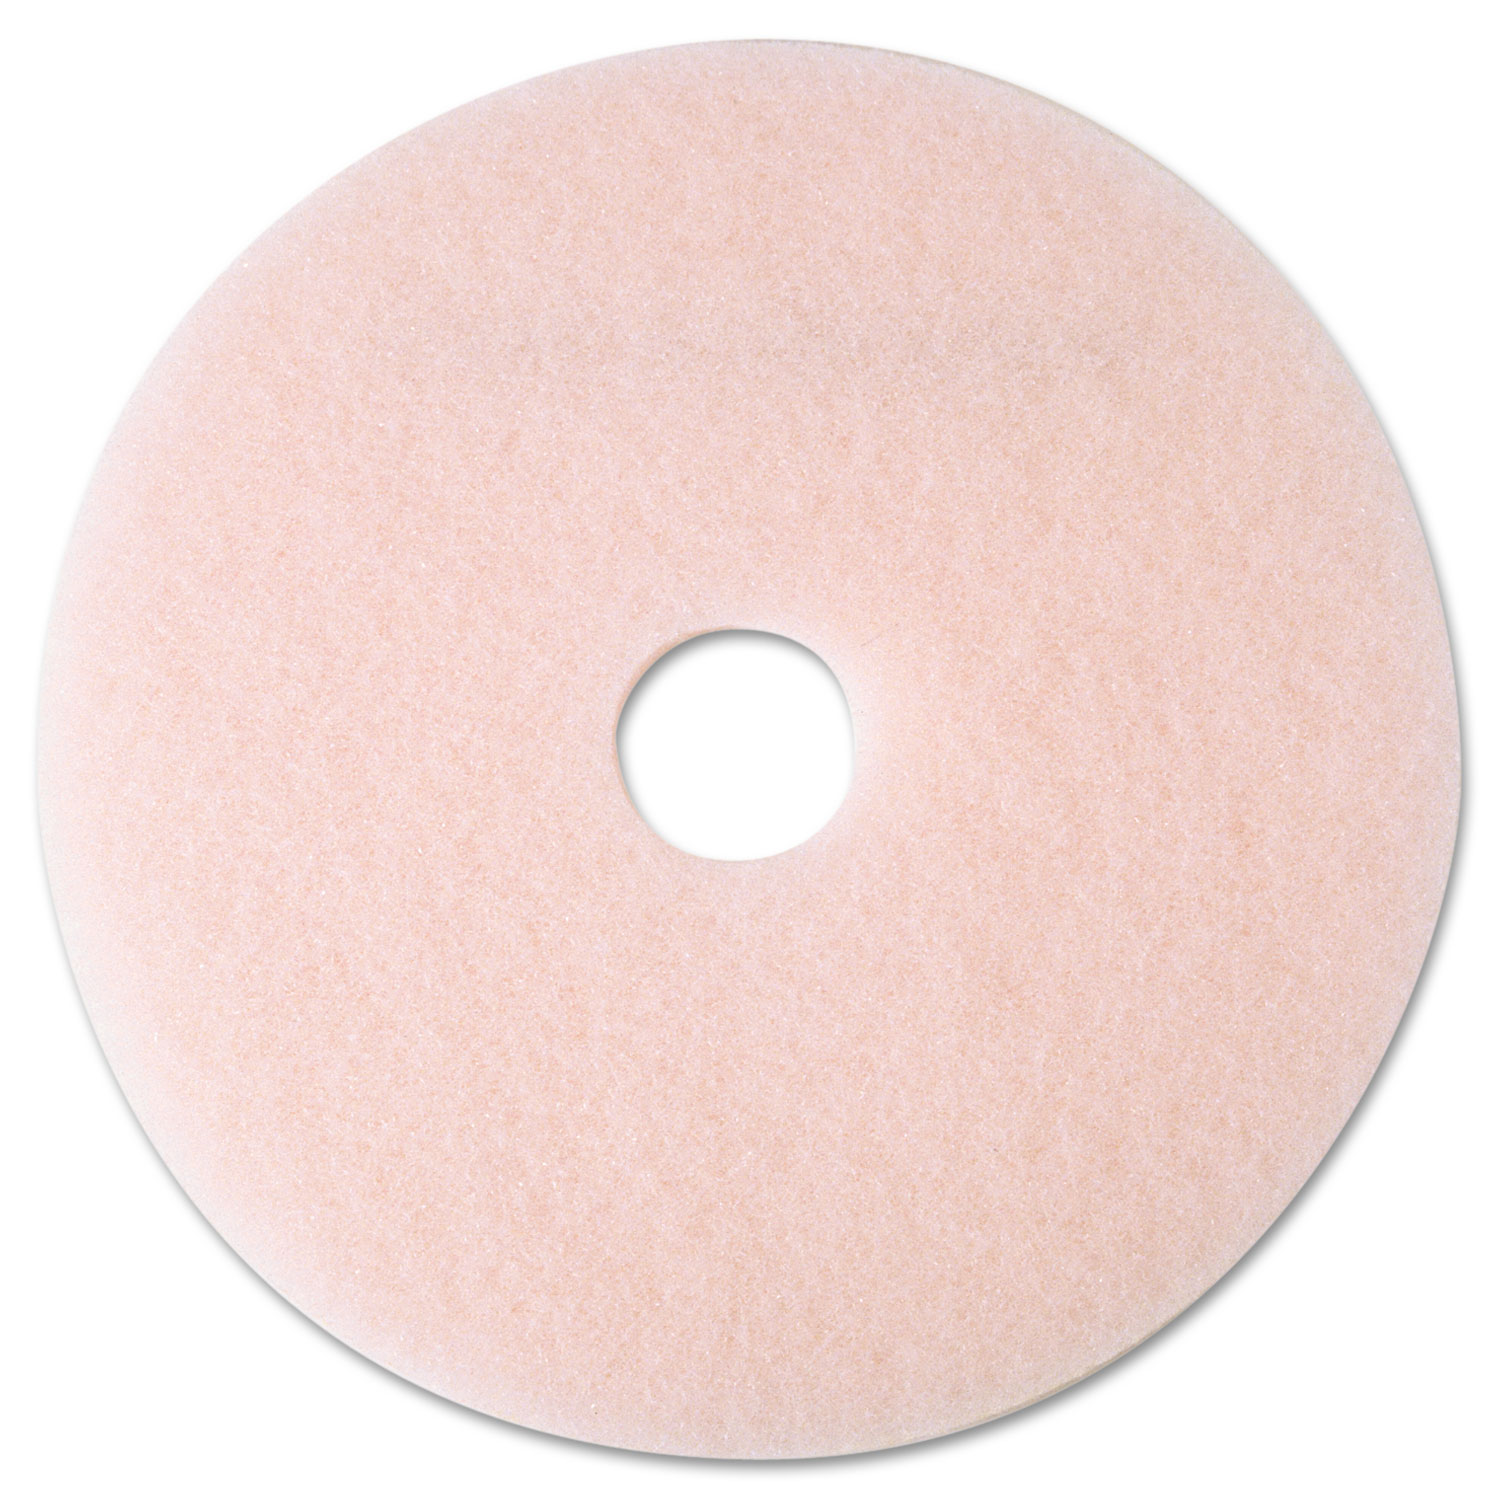  3M 360019 Ultra High-Speed Eraser Floor Burnishing Pad 3600, 19 Diameter, Pink, 5/Carton (MMM25857) 